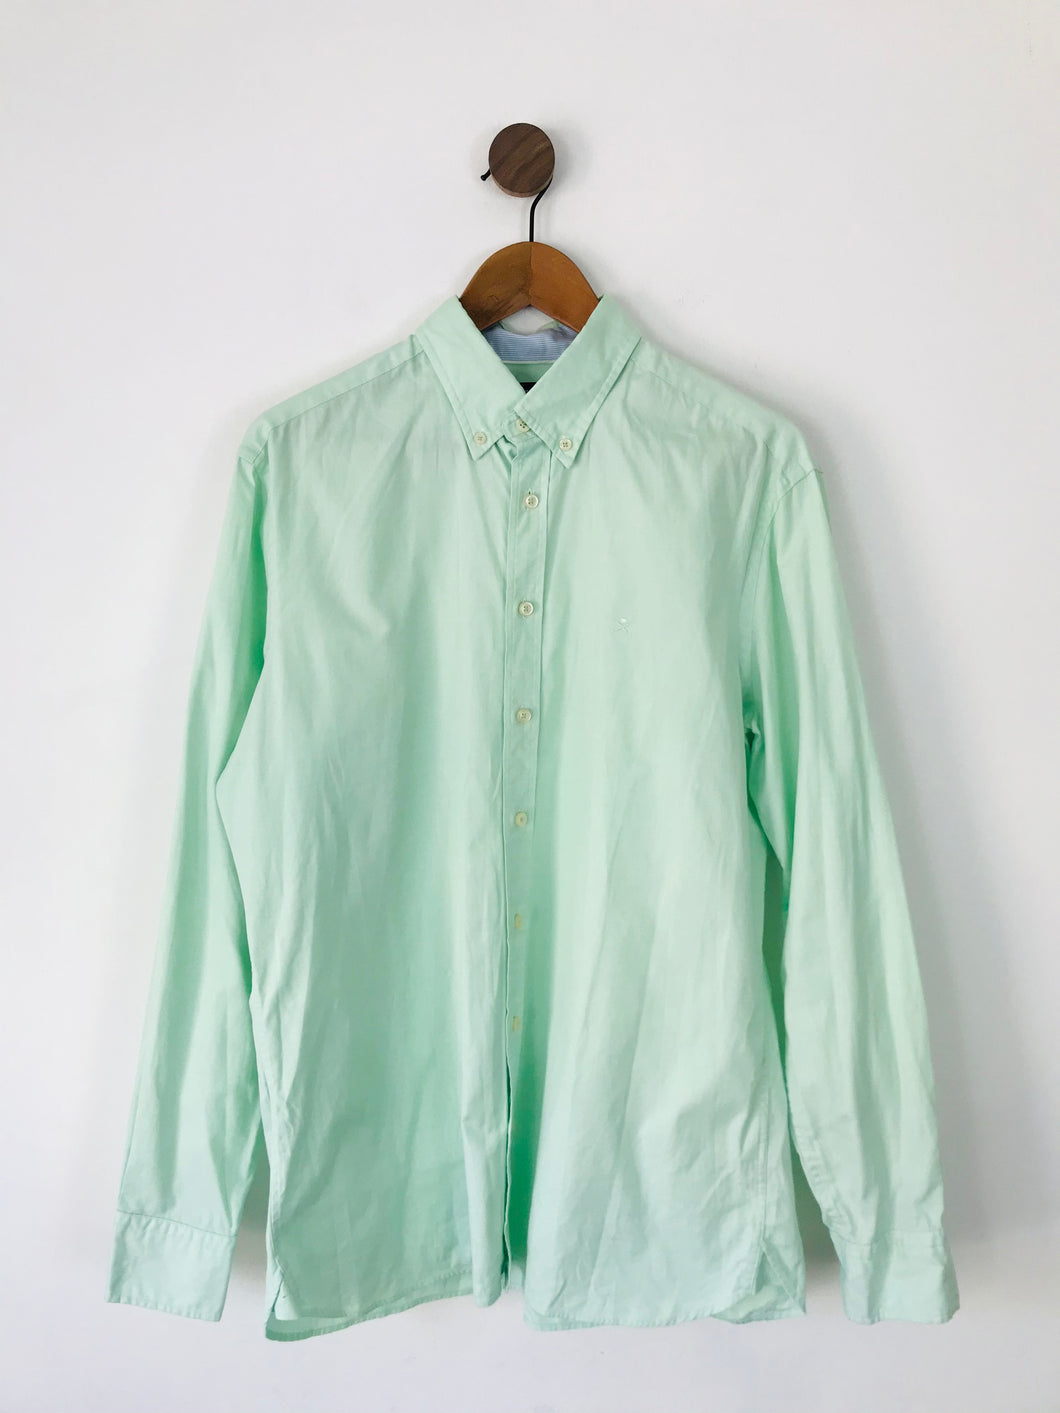 Hackett London Men’s Long Sleeve Shirt | L | Mint Green